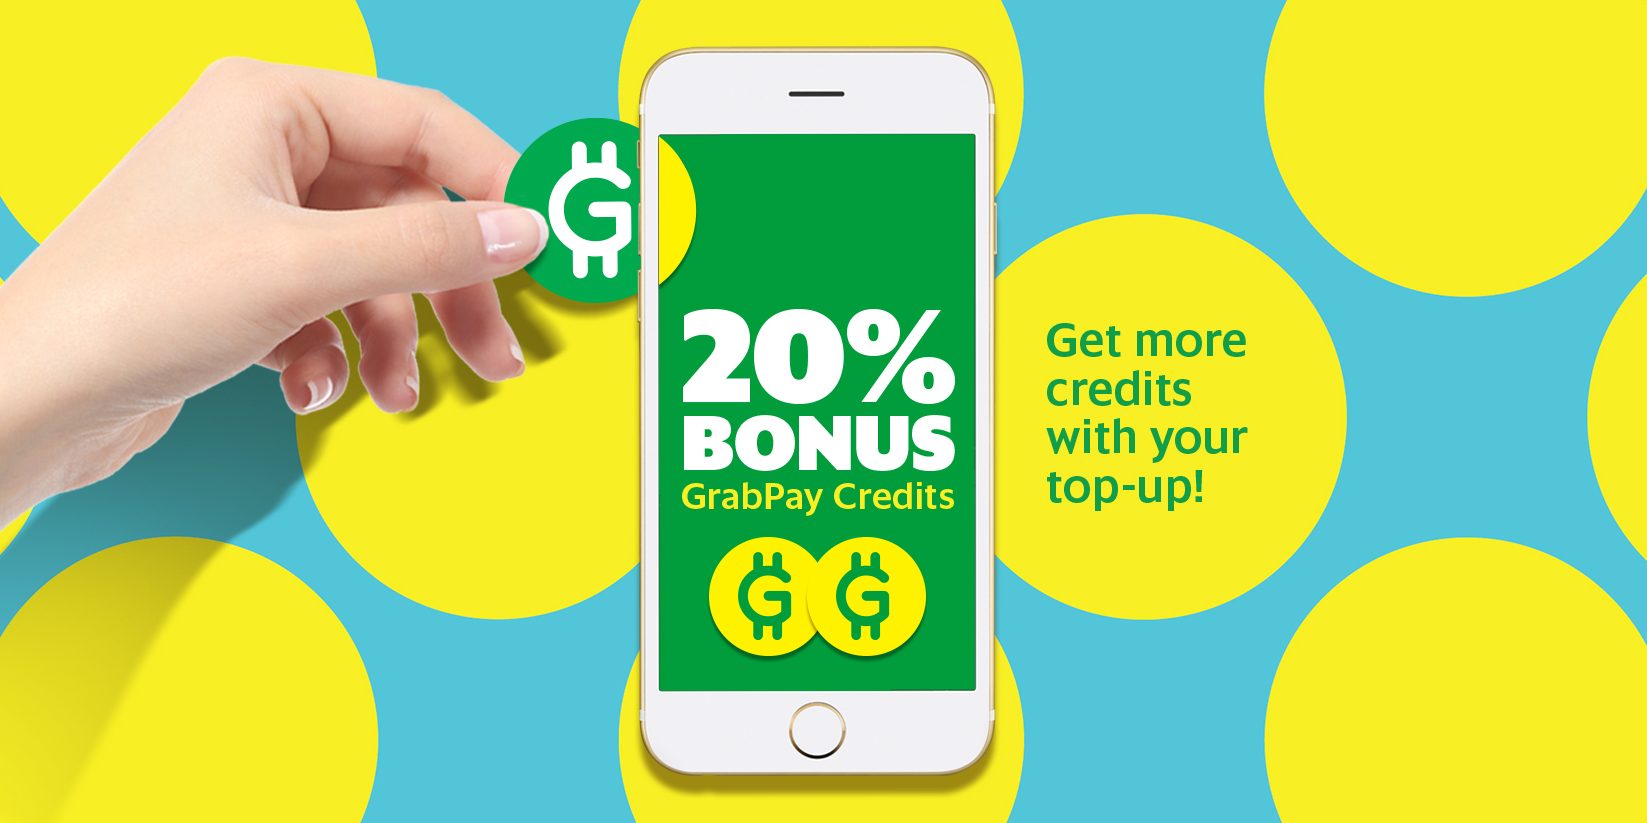 Grab Singapore Top-up GrabPay Credits & Get 20% More Promotion 12 May 2017